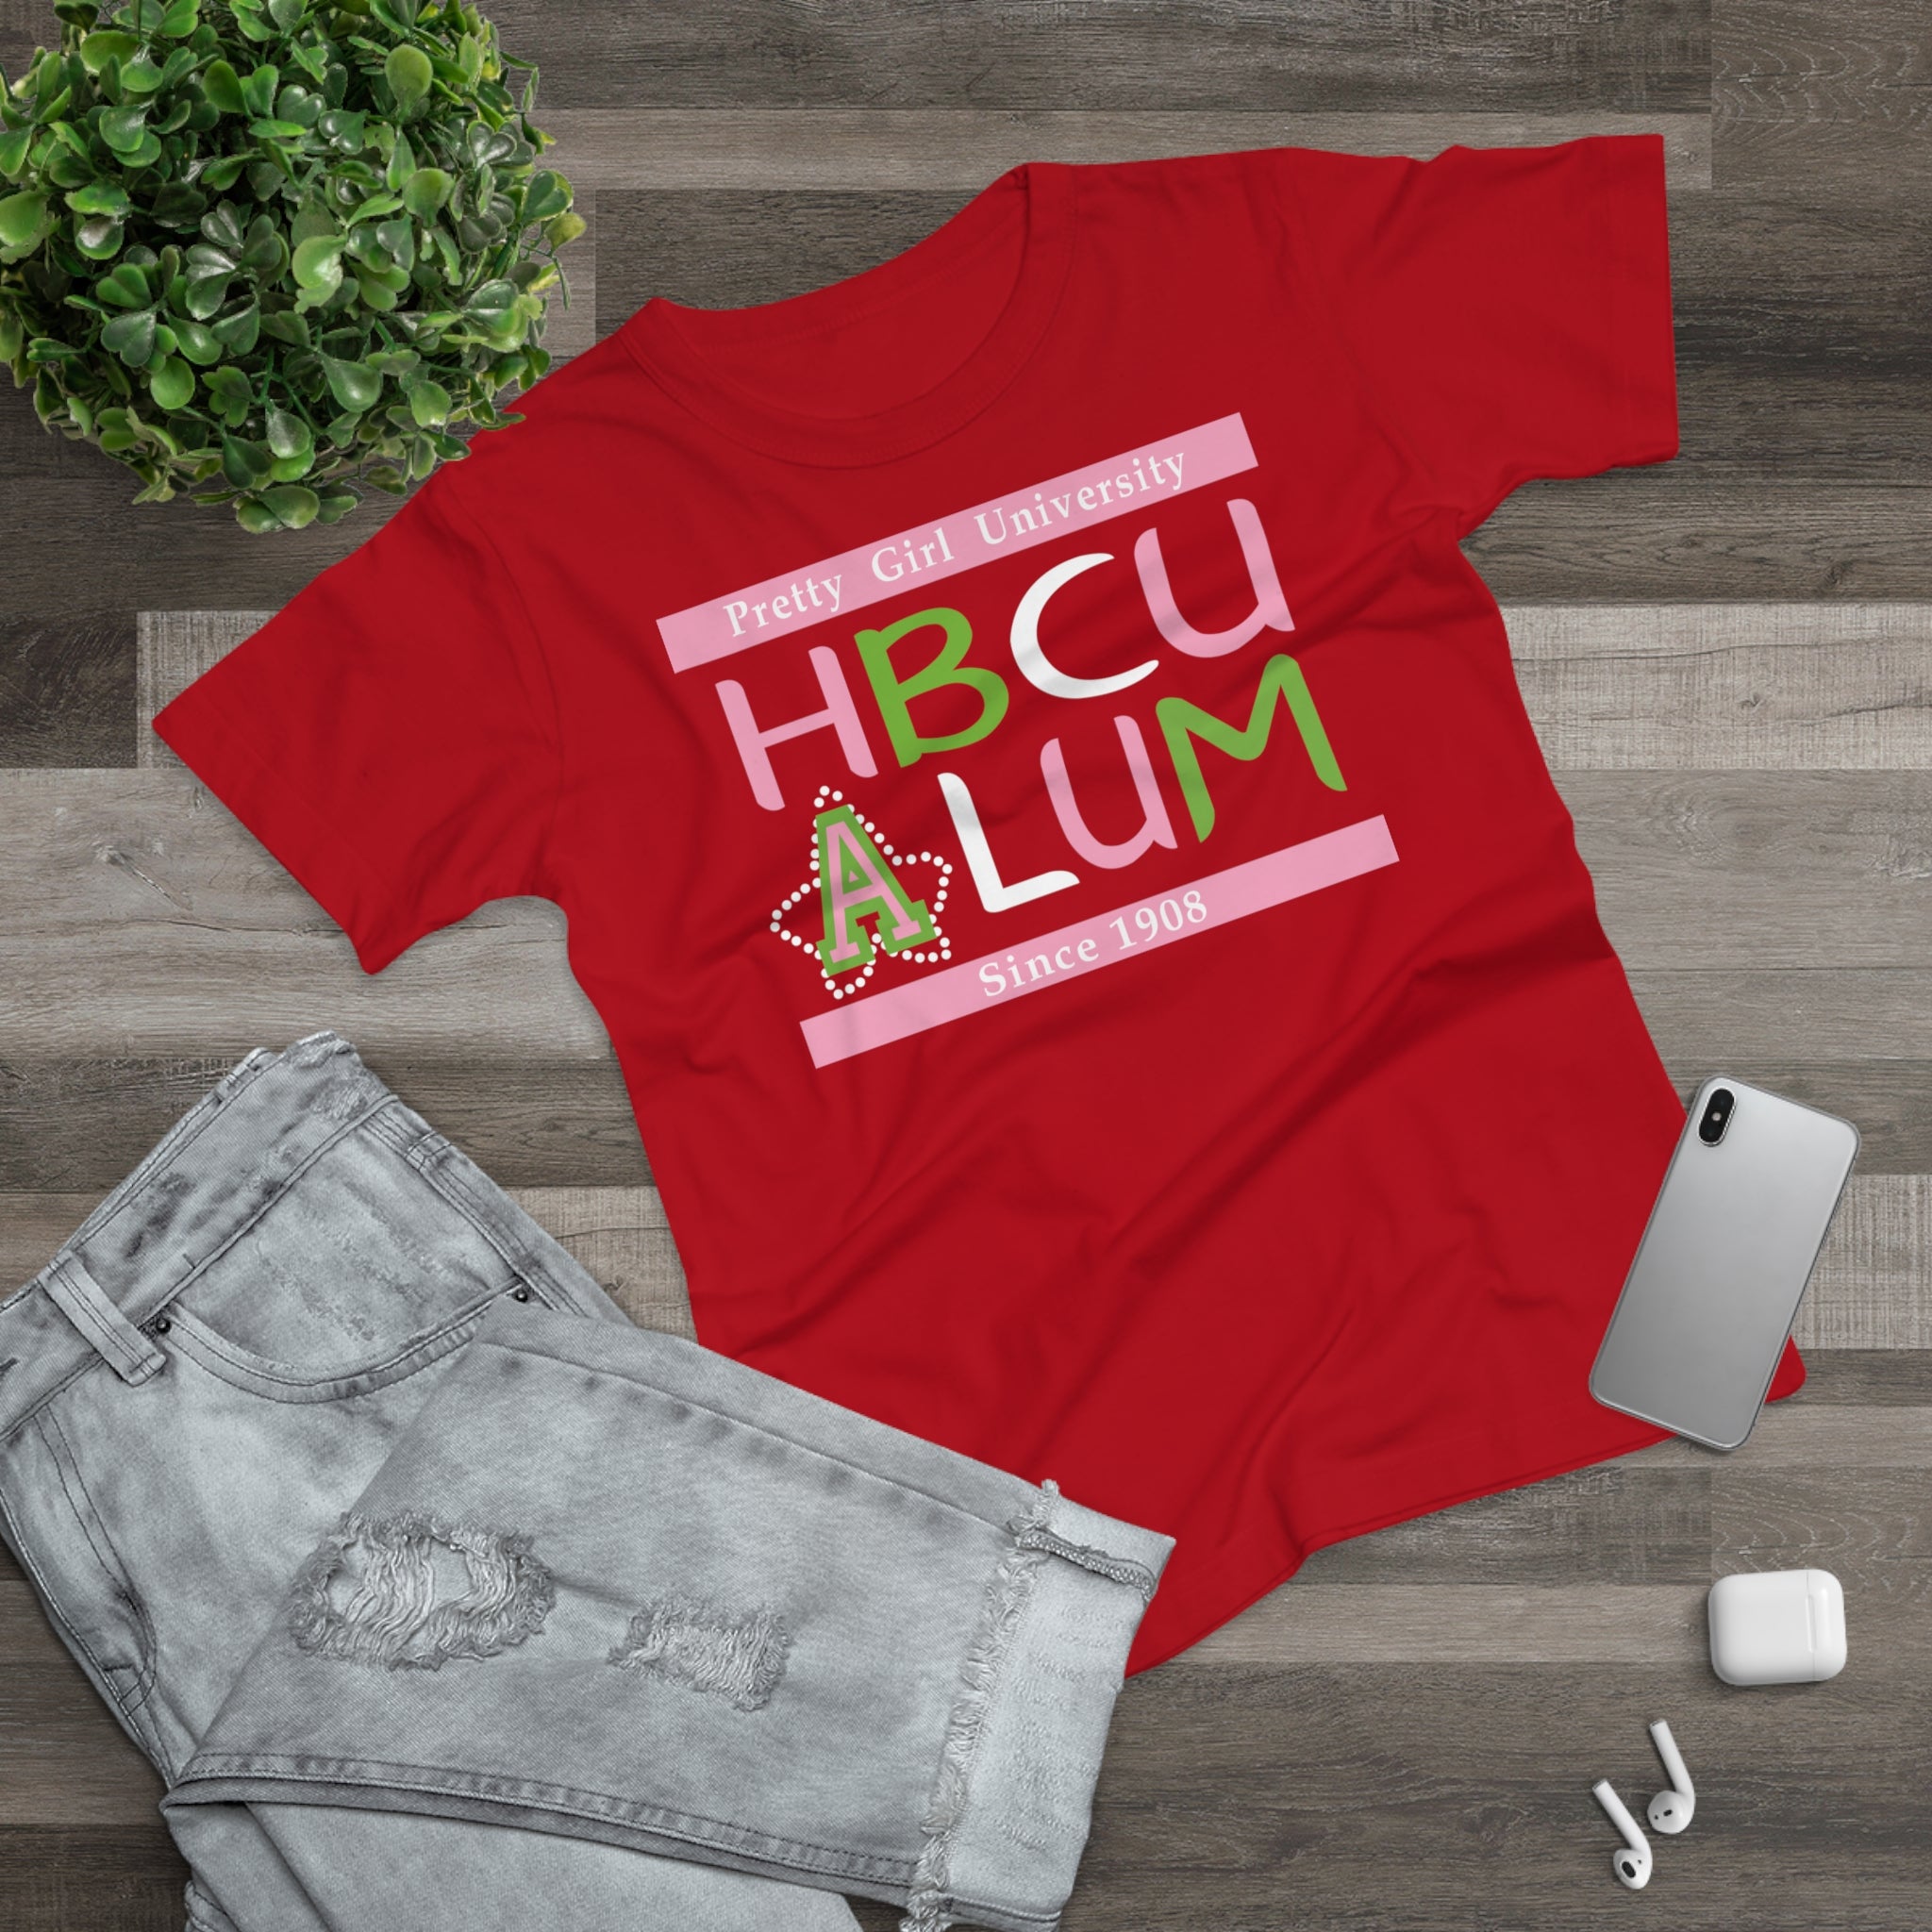 HBCU Alum Women's Shirt